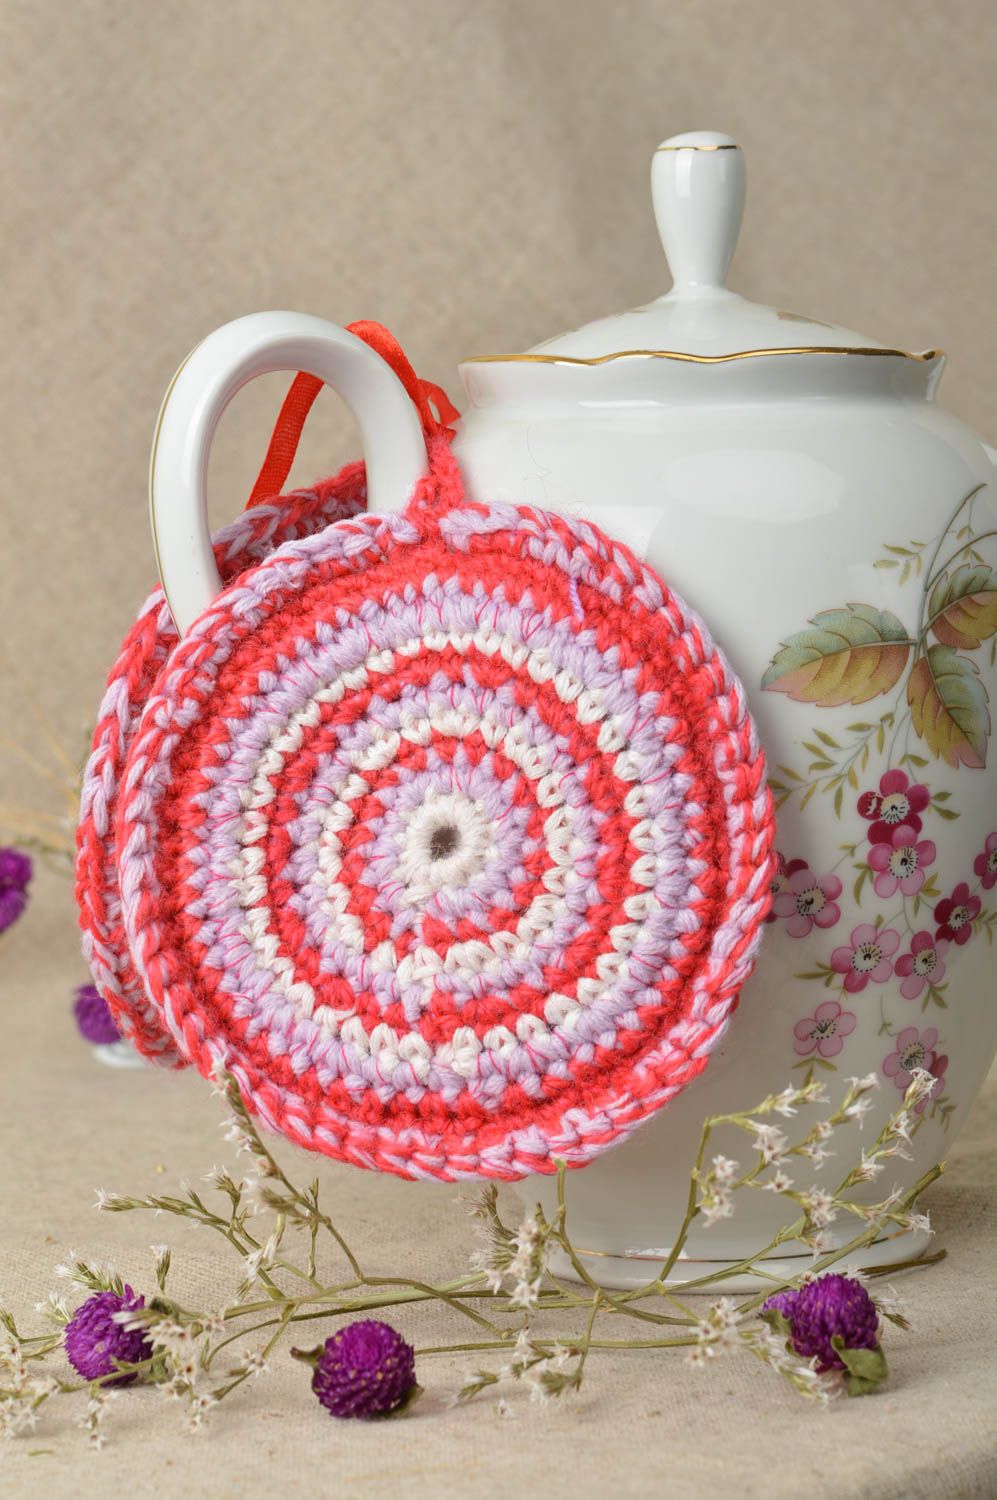 Stylish handmade crochet pot holder home textiles kitchen supplies gift ideas photo 1